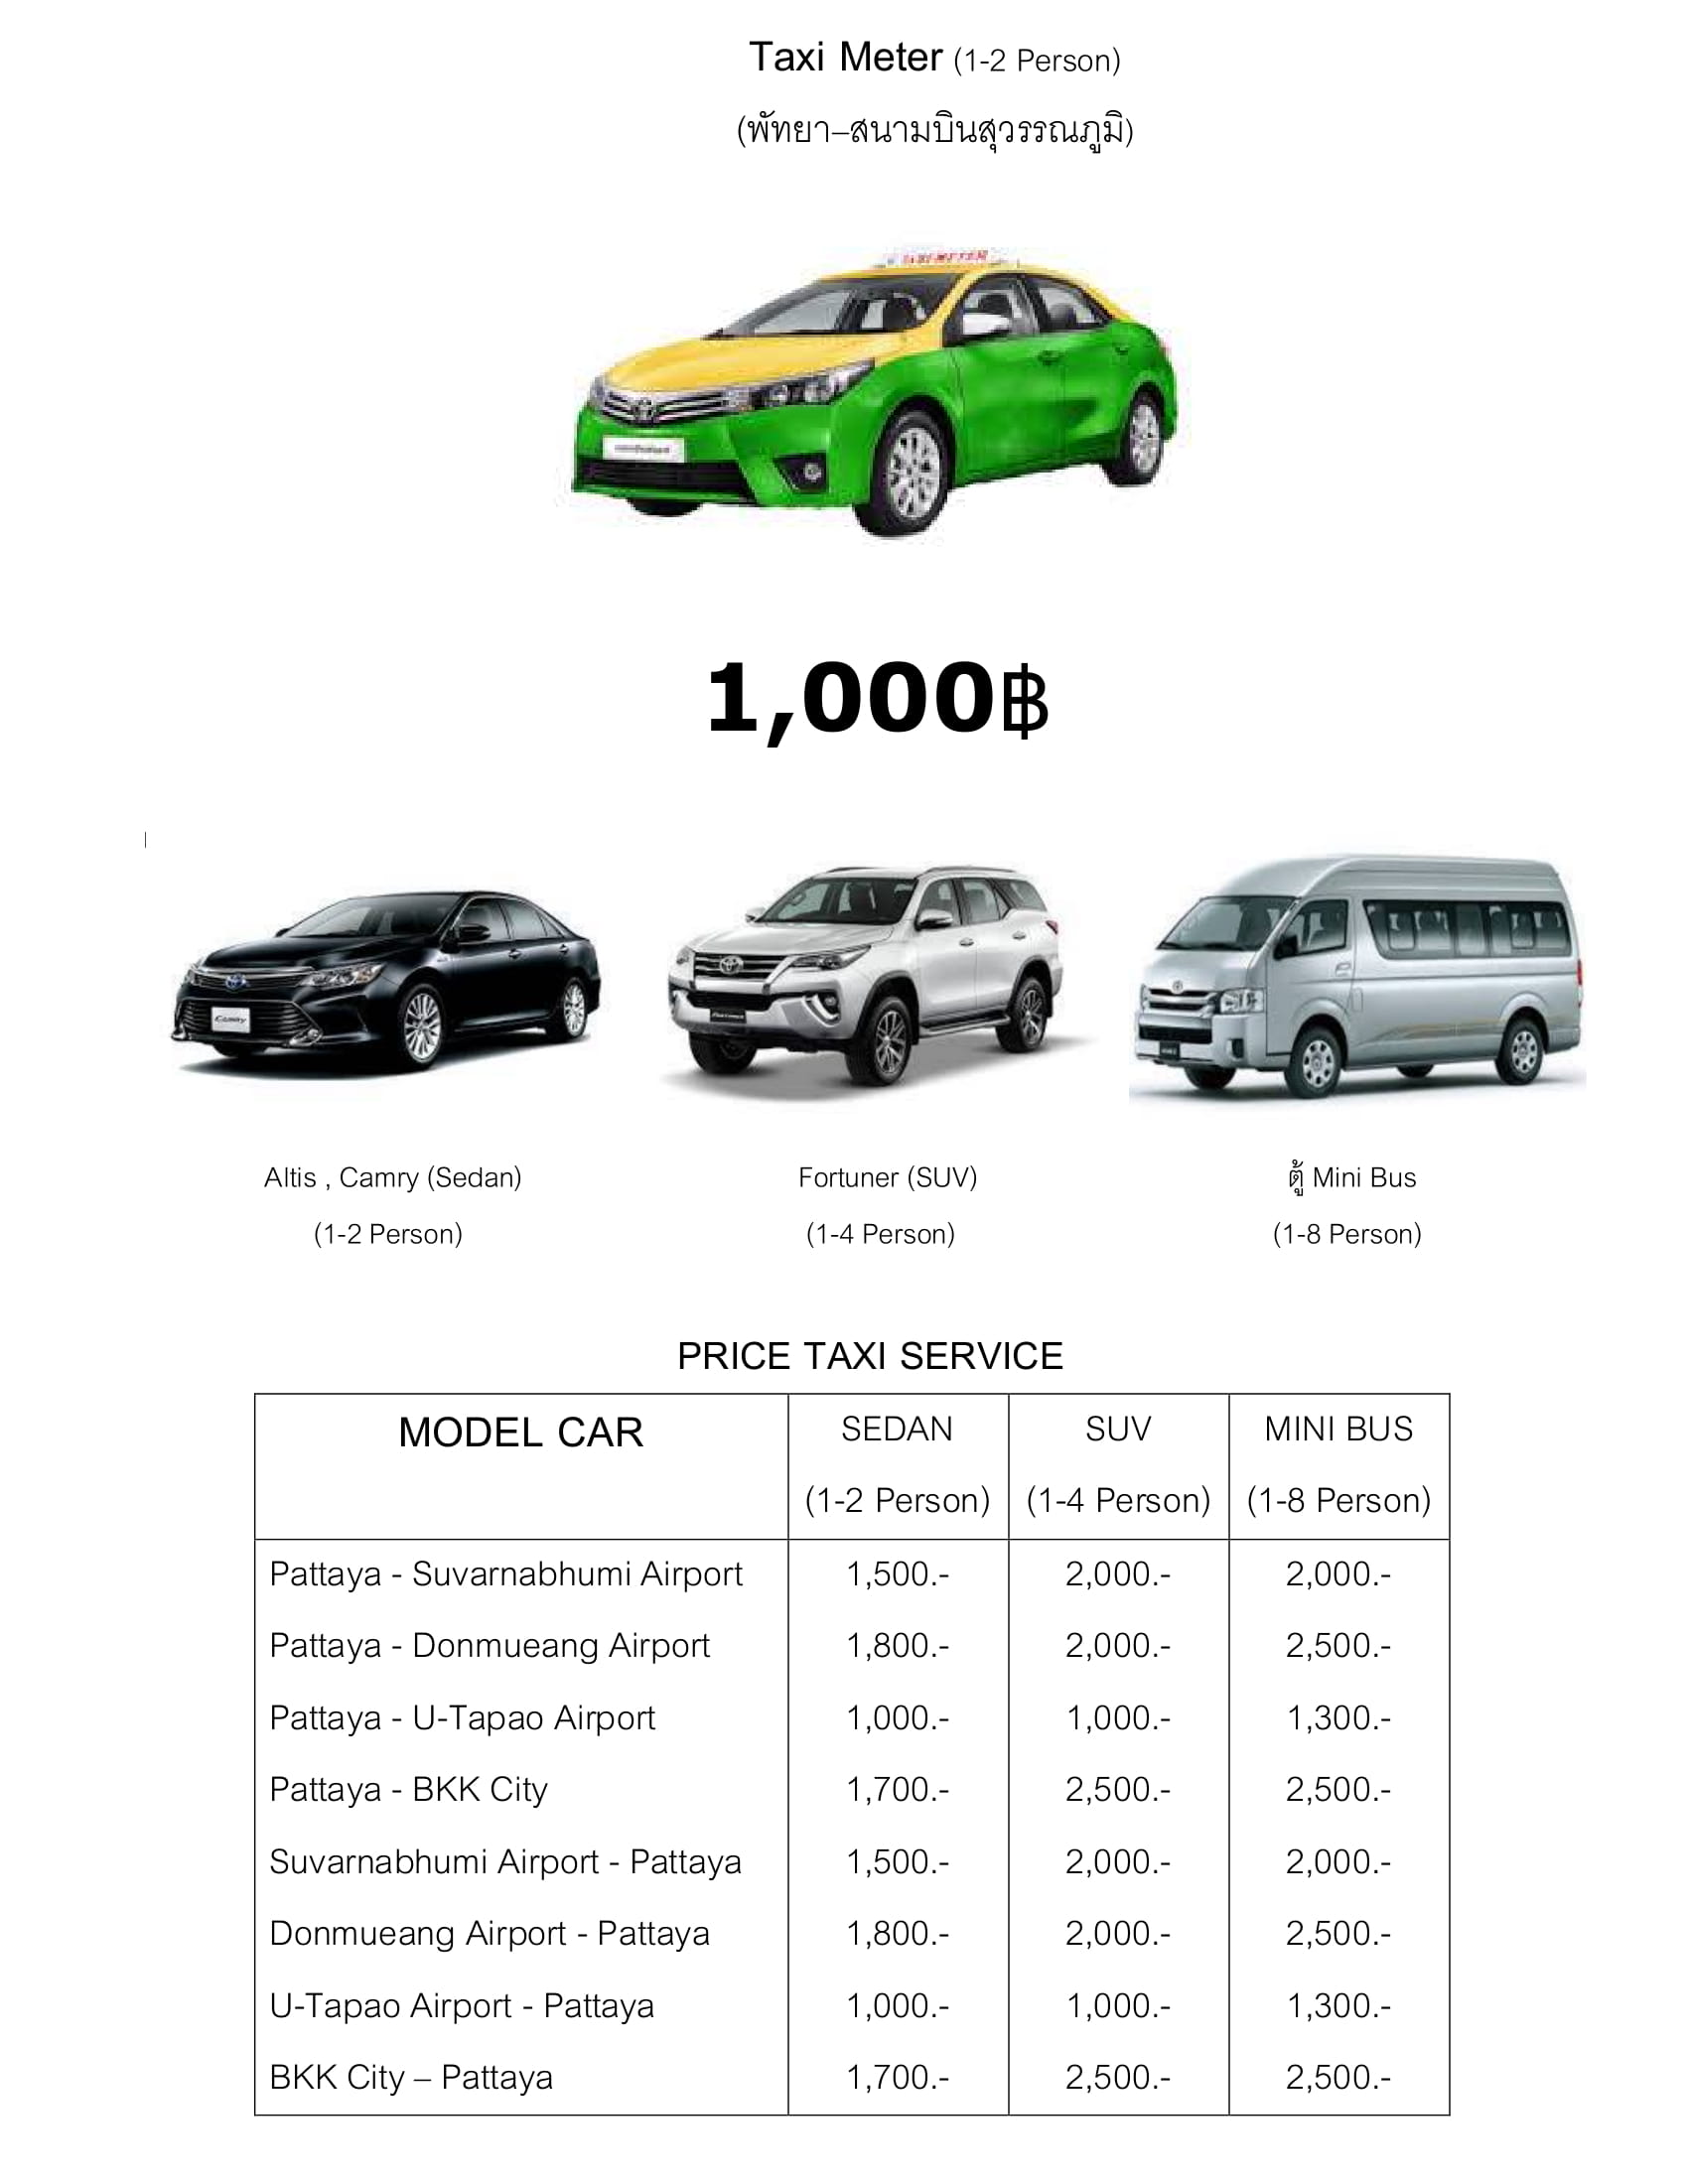 Aruba Taxi Fare Chart